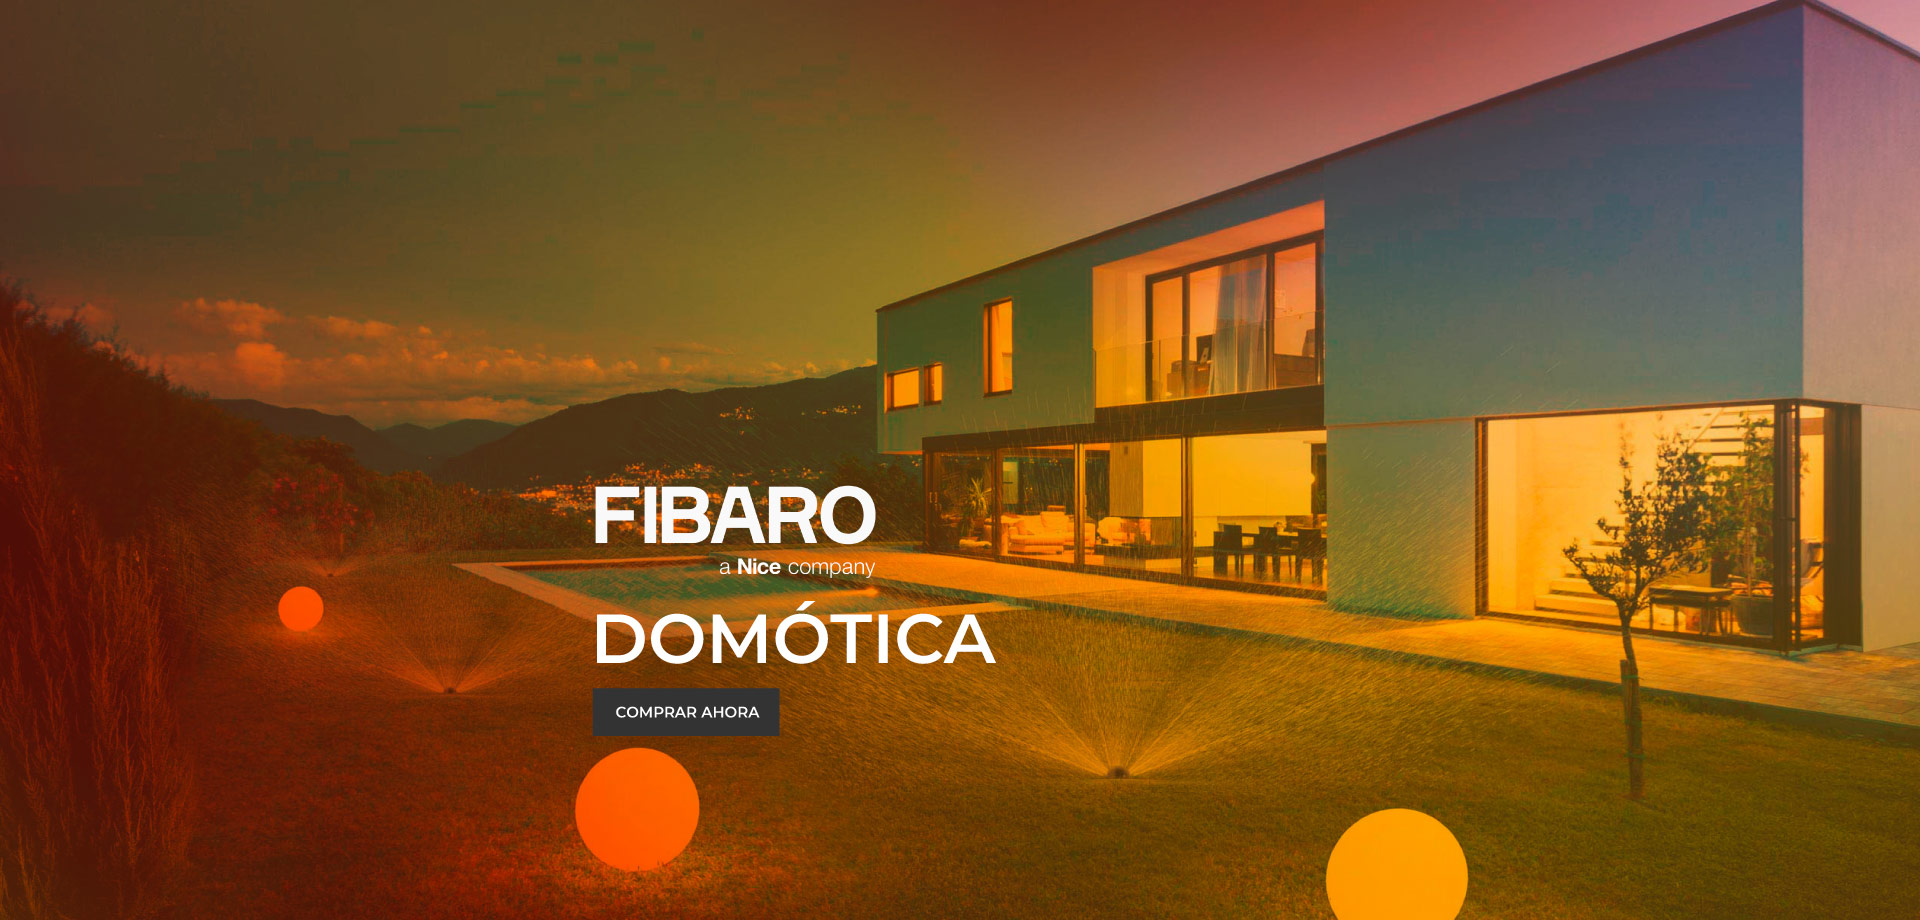 fibaro-domotica-banner-desktop